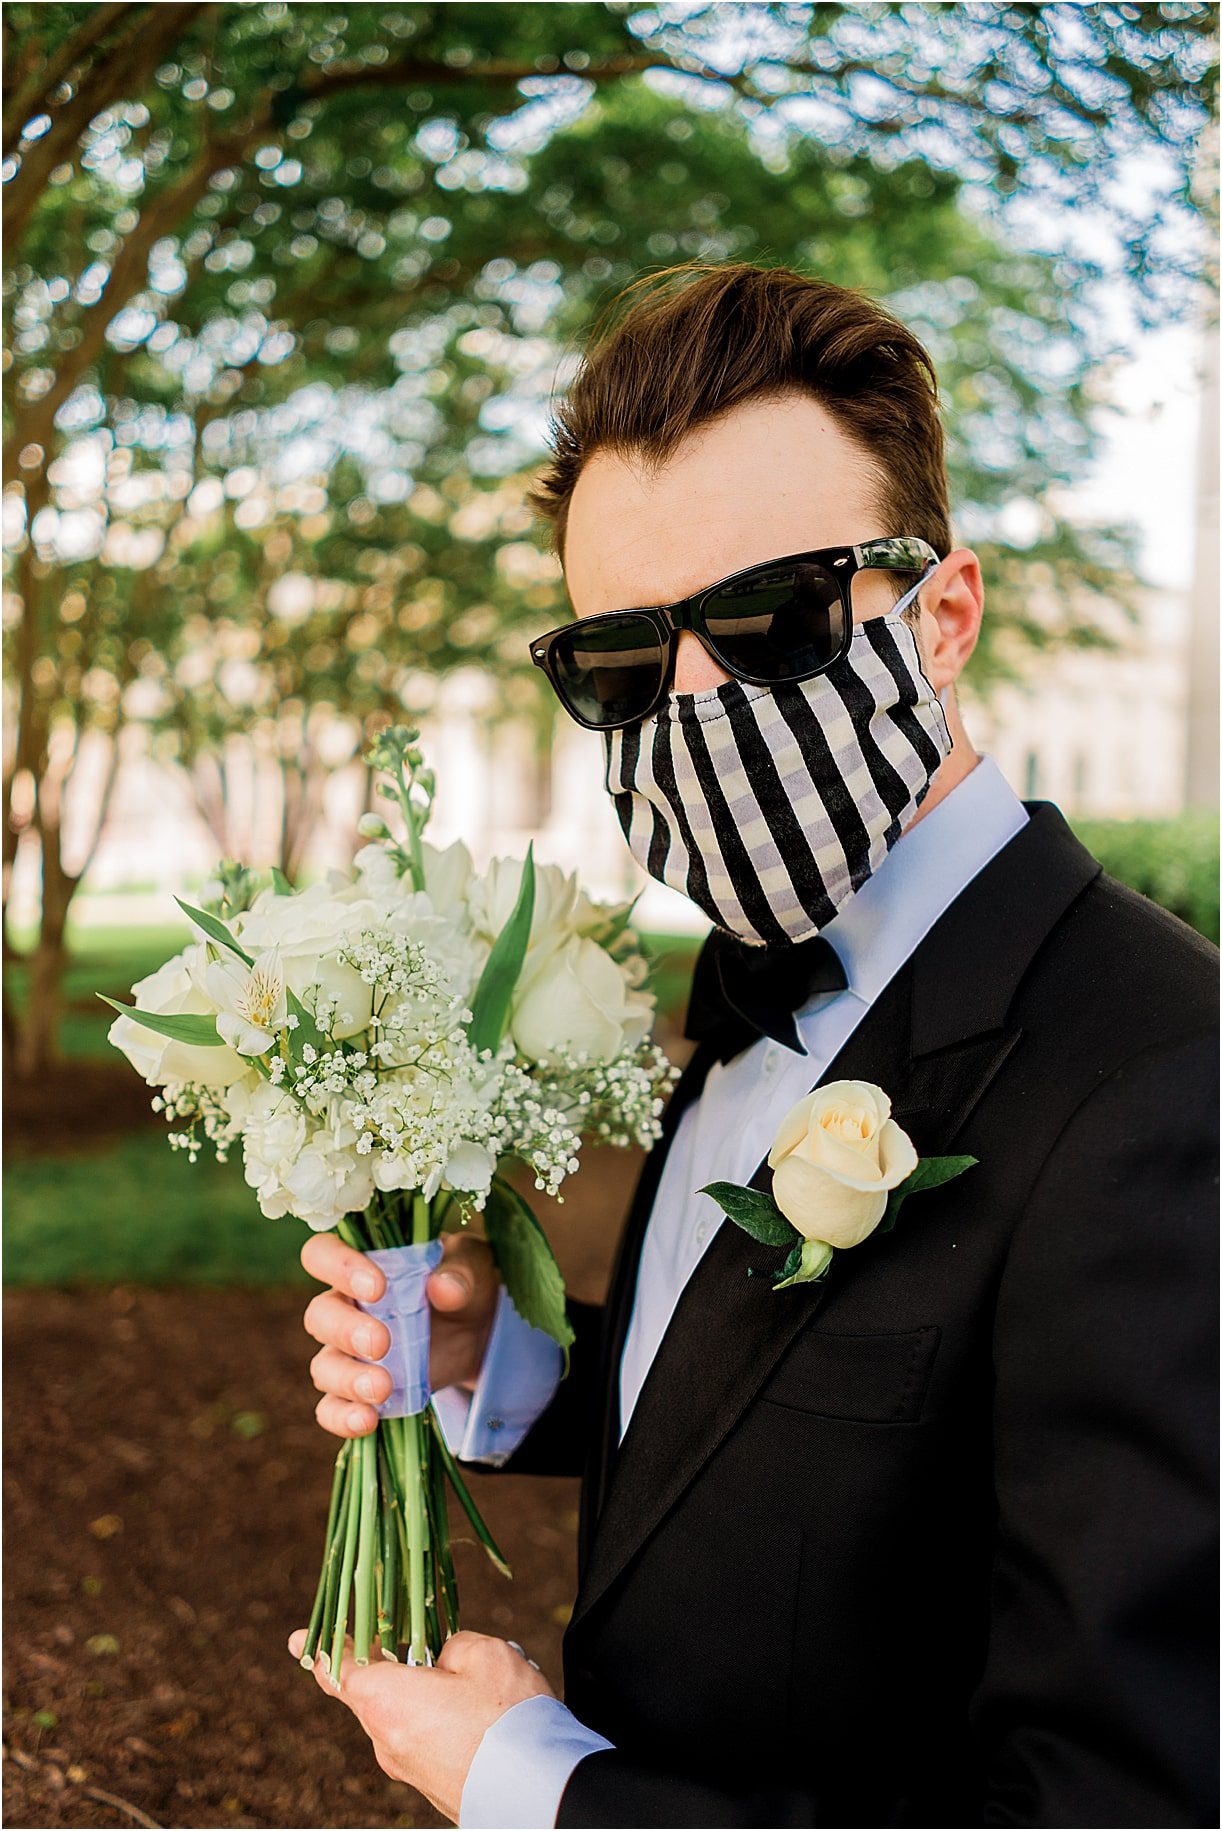 Groom Mask | Micro Wedding DC | Pop Up Wedding DC | Hill City Bride Virginia Wedding Blog